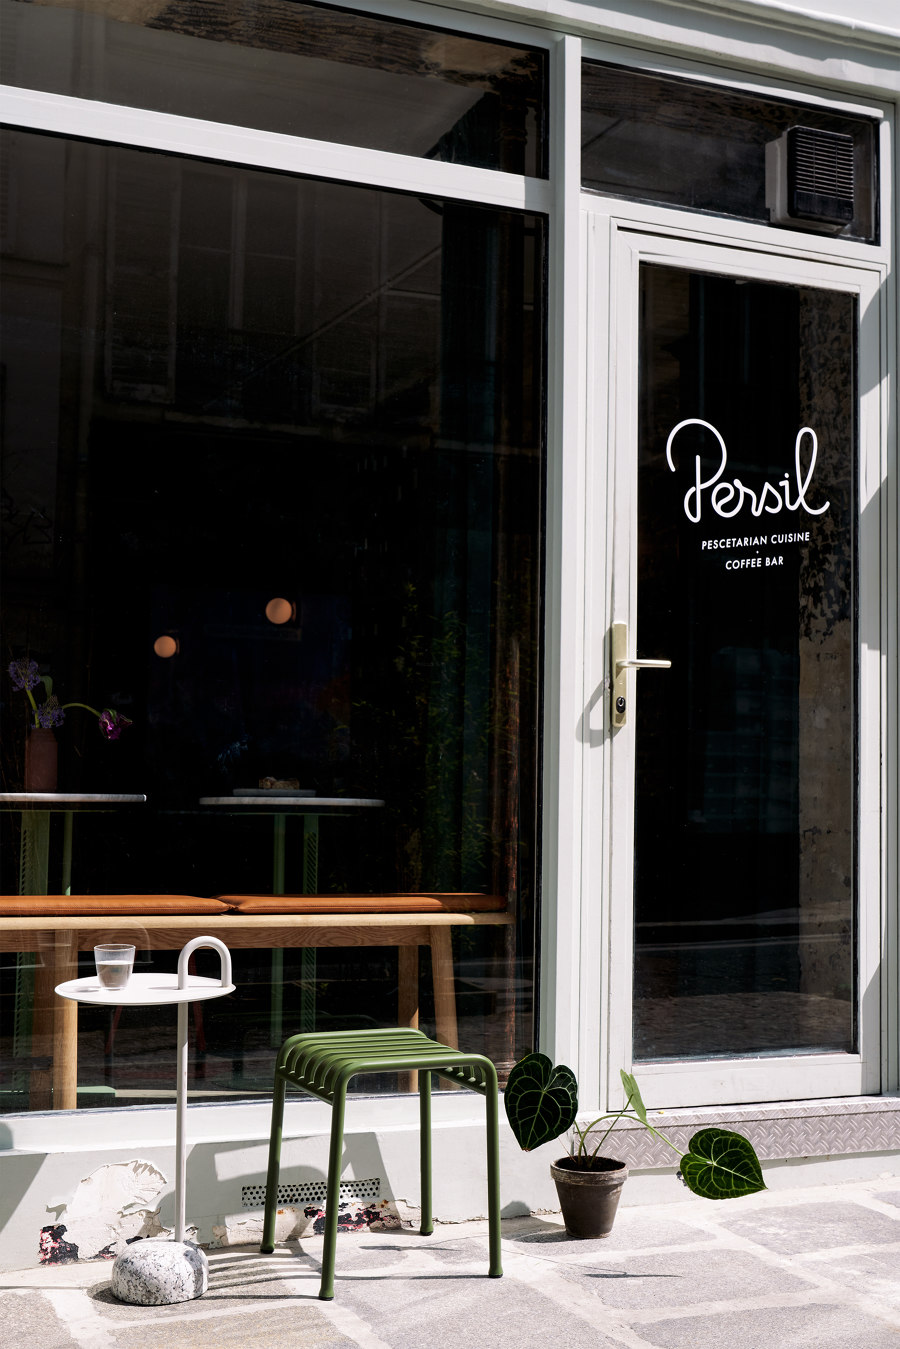 Persil by toi toi toi creative studio | Restaurant interiors